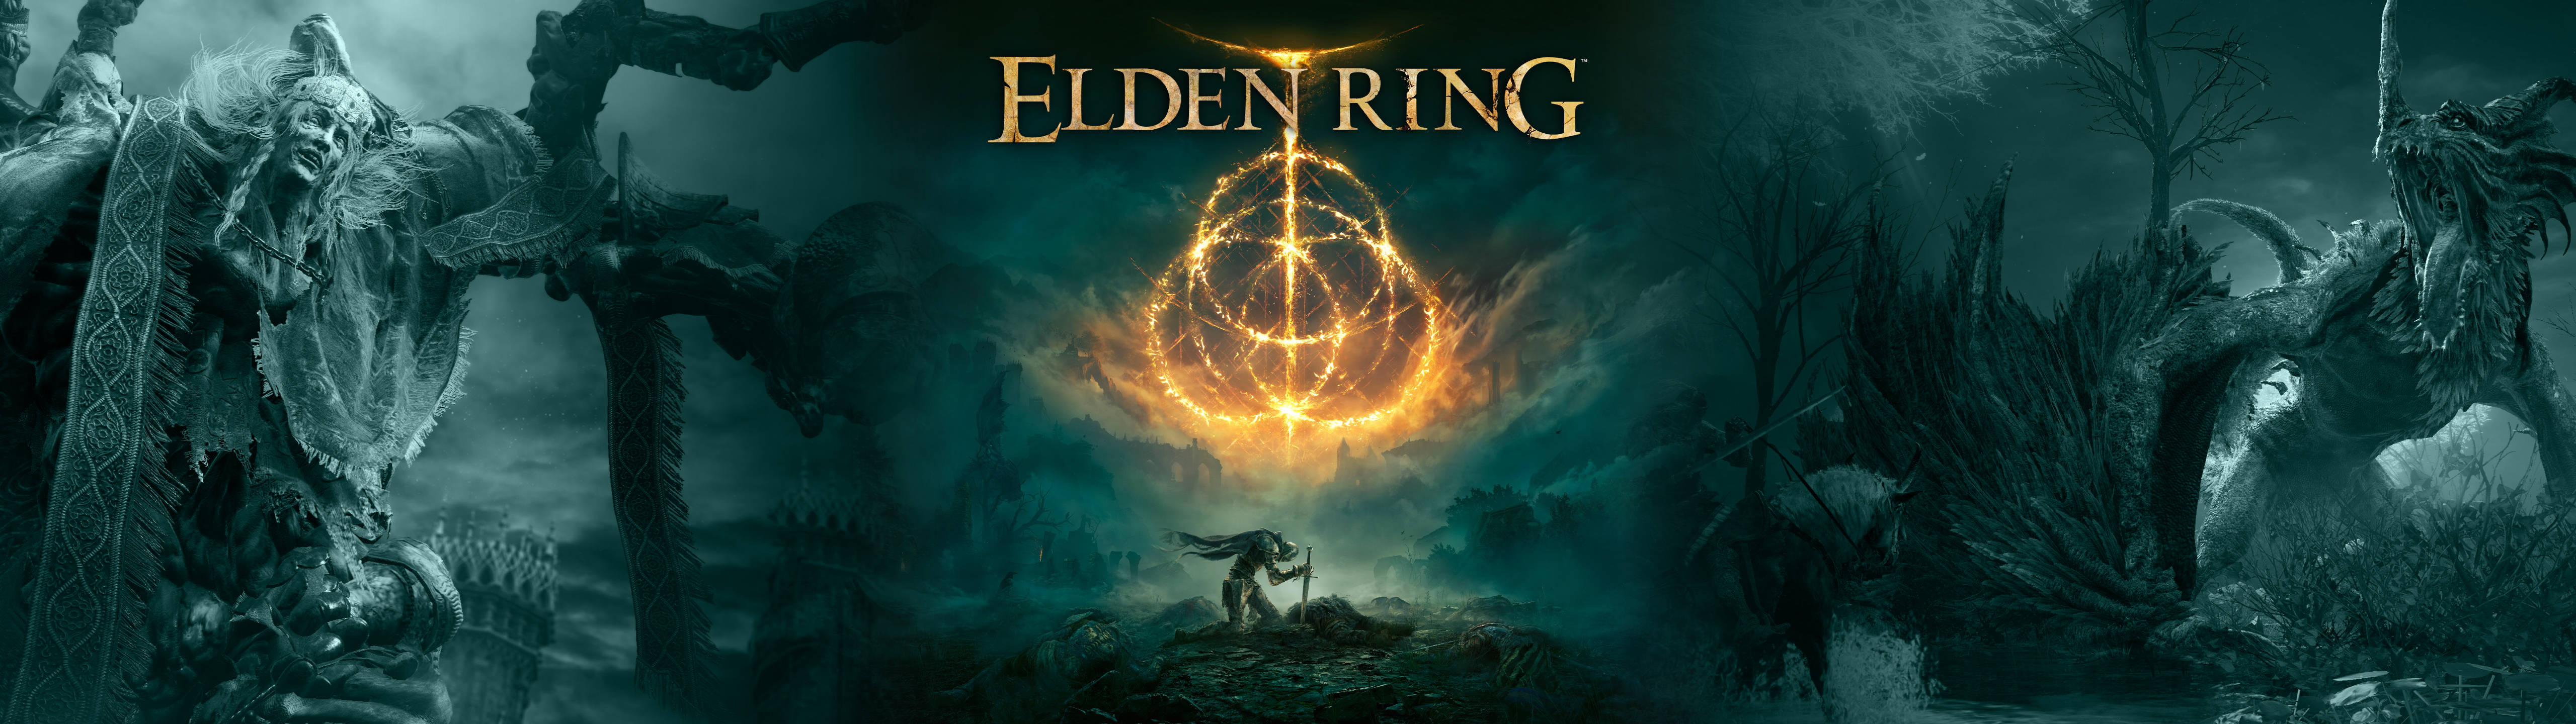 Elden Ring 5120x1440 Gaming